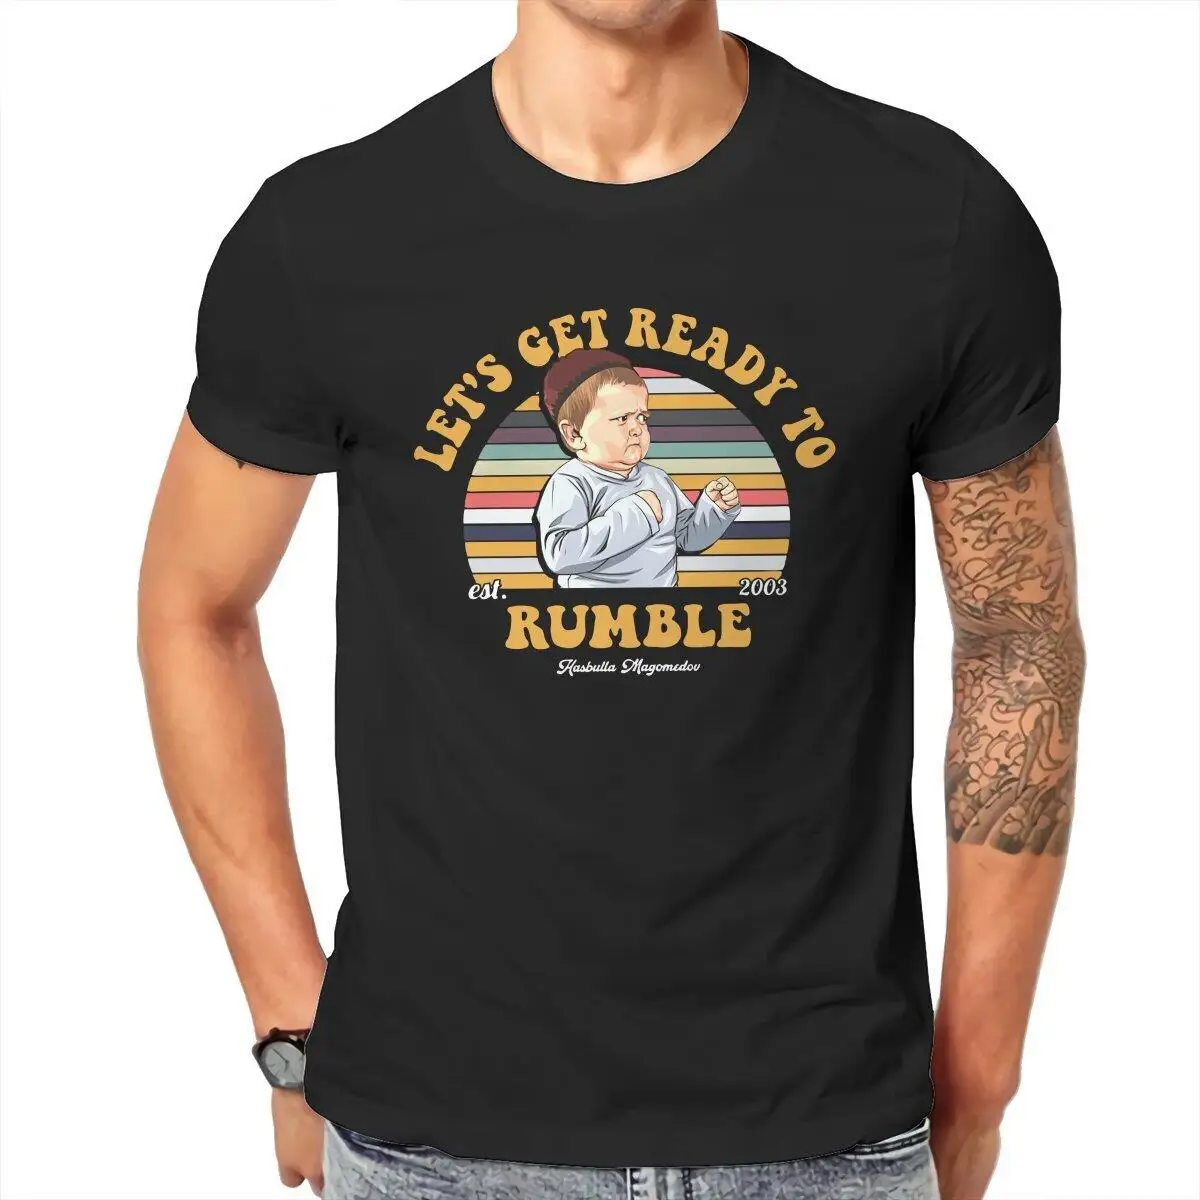 Let's Get Ready To Rumble  T-Shirts Men Pure Cotton T Shirts Hasbulla Magomedov Short Sleeve Tee Shirt Gift Idea Clothing